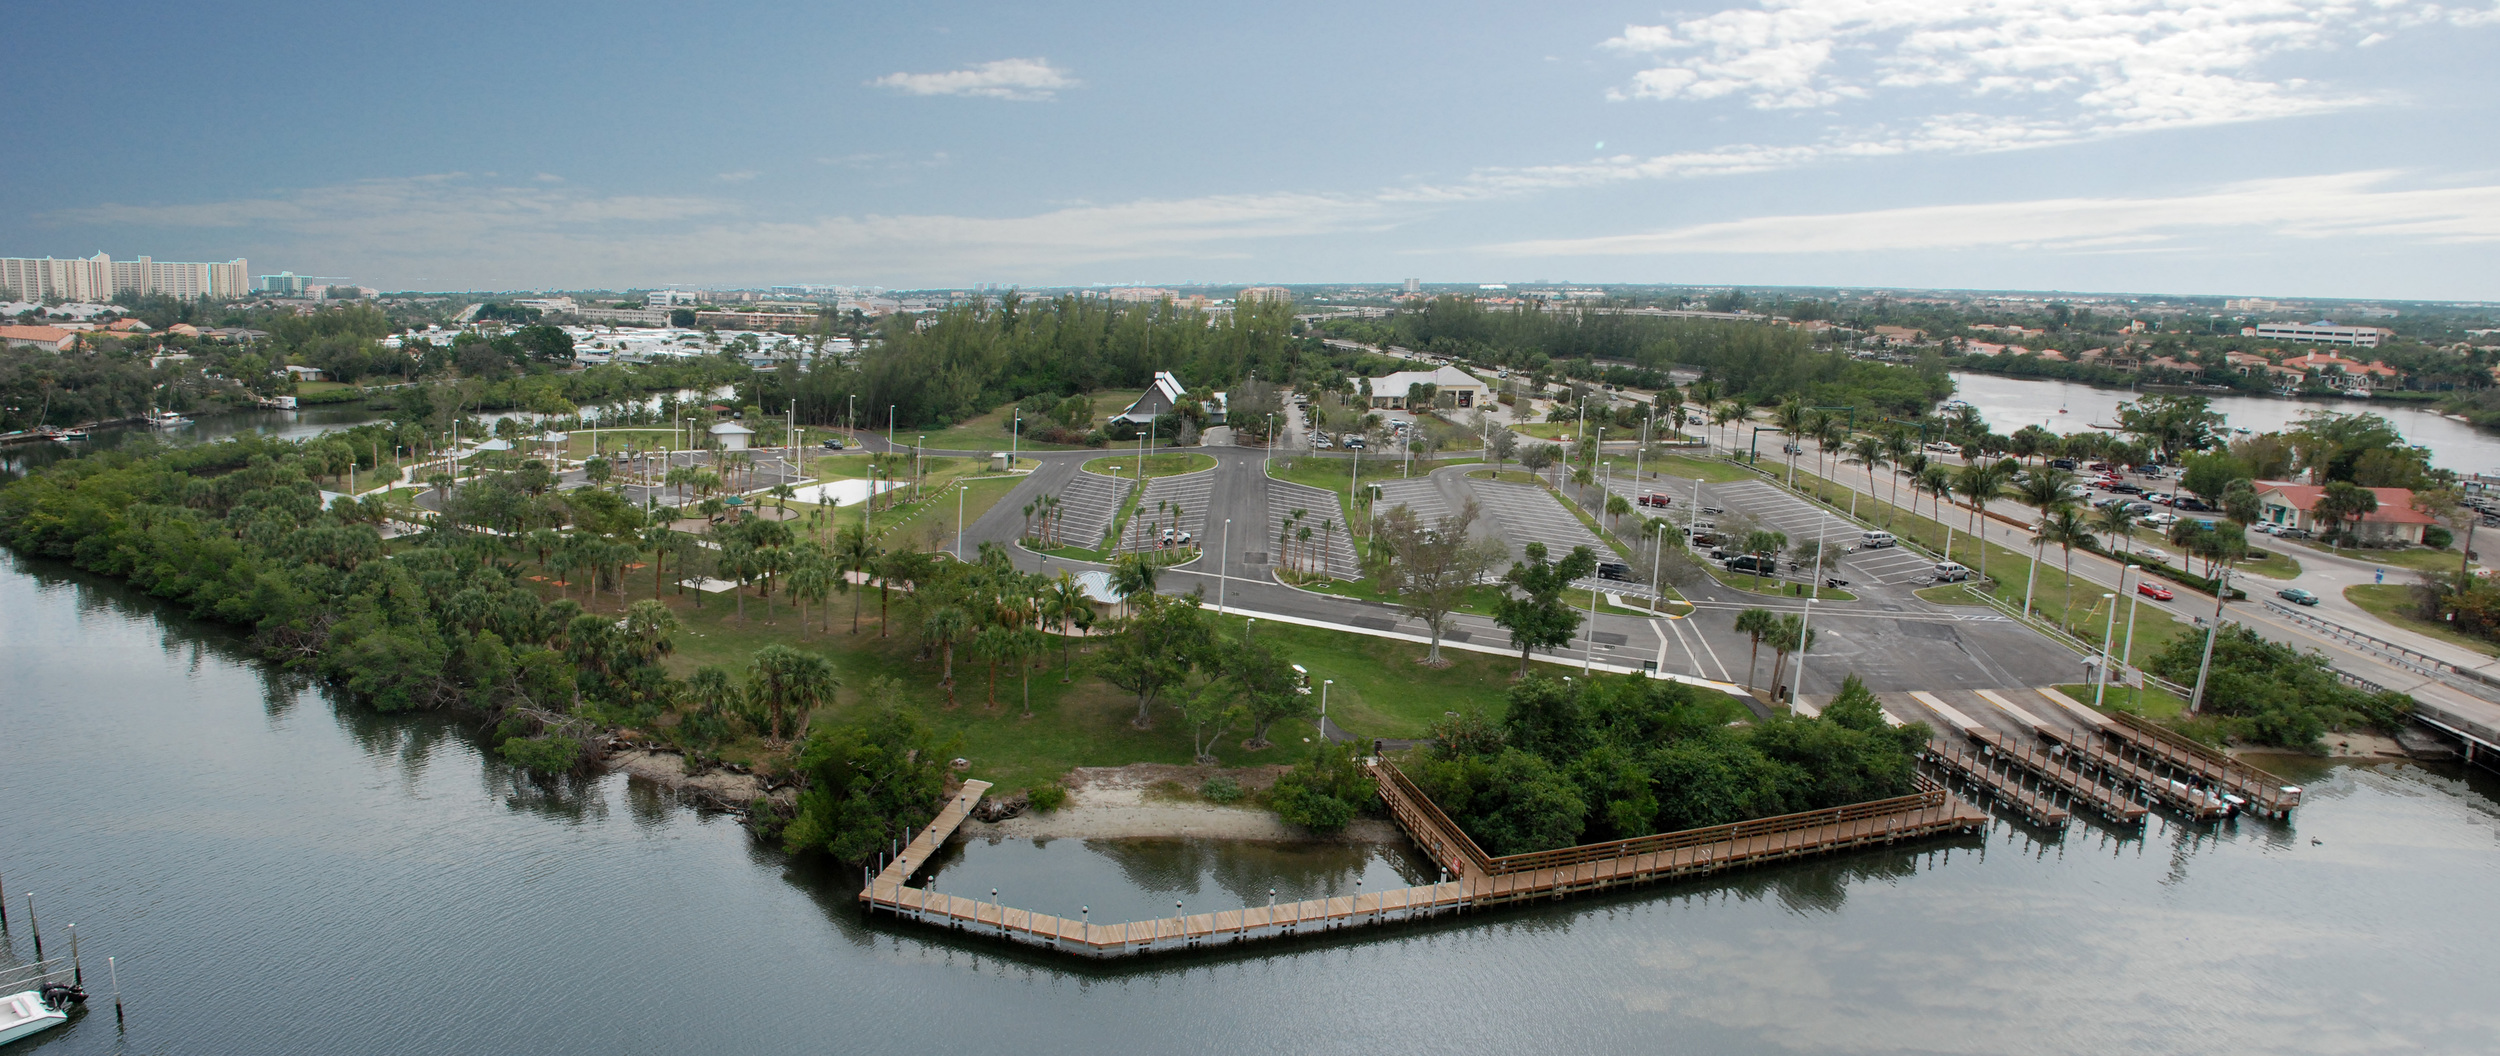 Burt Reynolds Park Palm Beach County Florida birds eye aerial.jpg